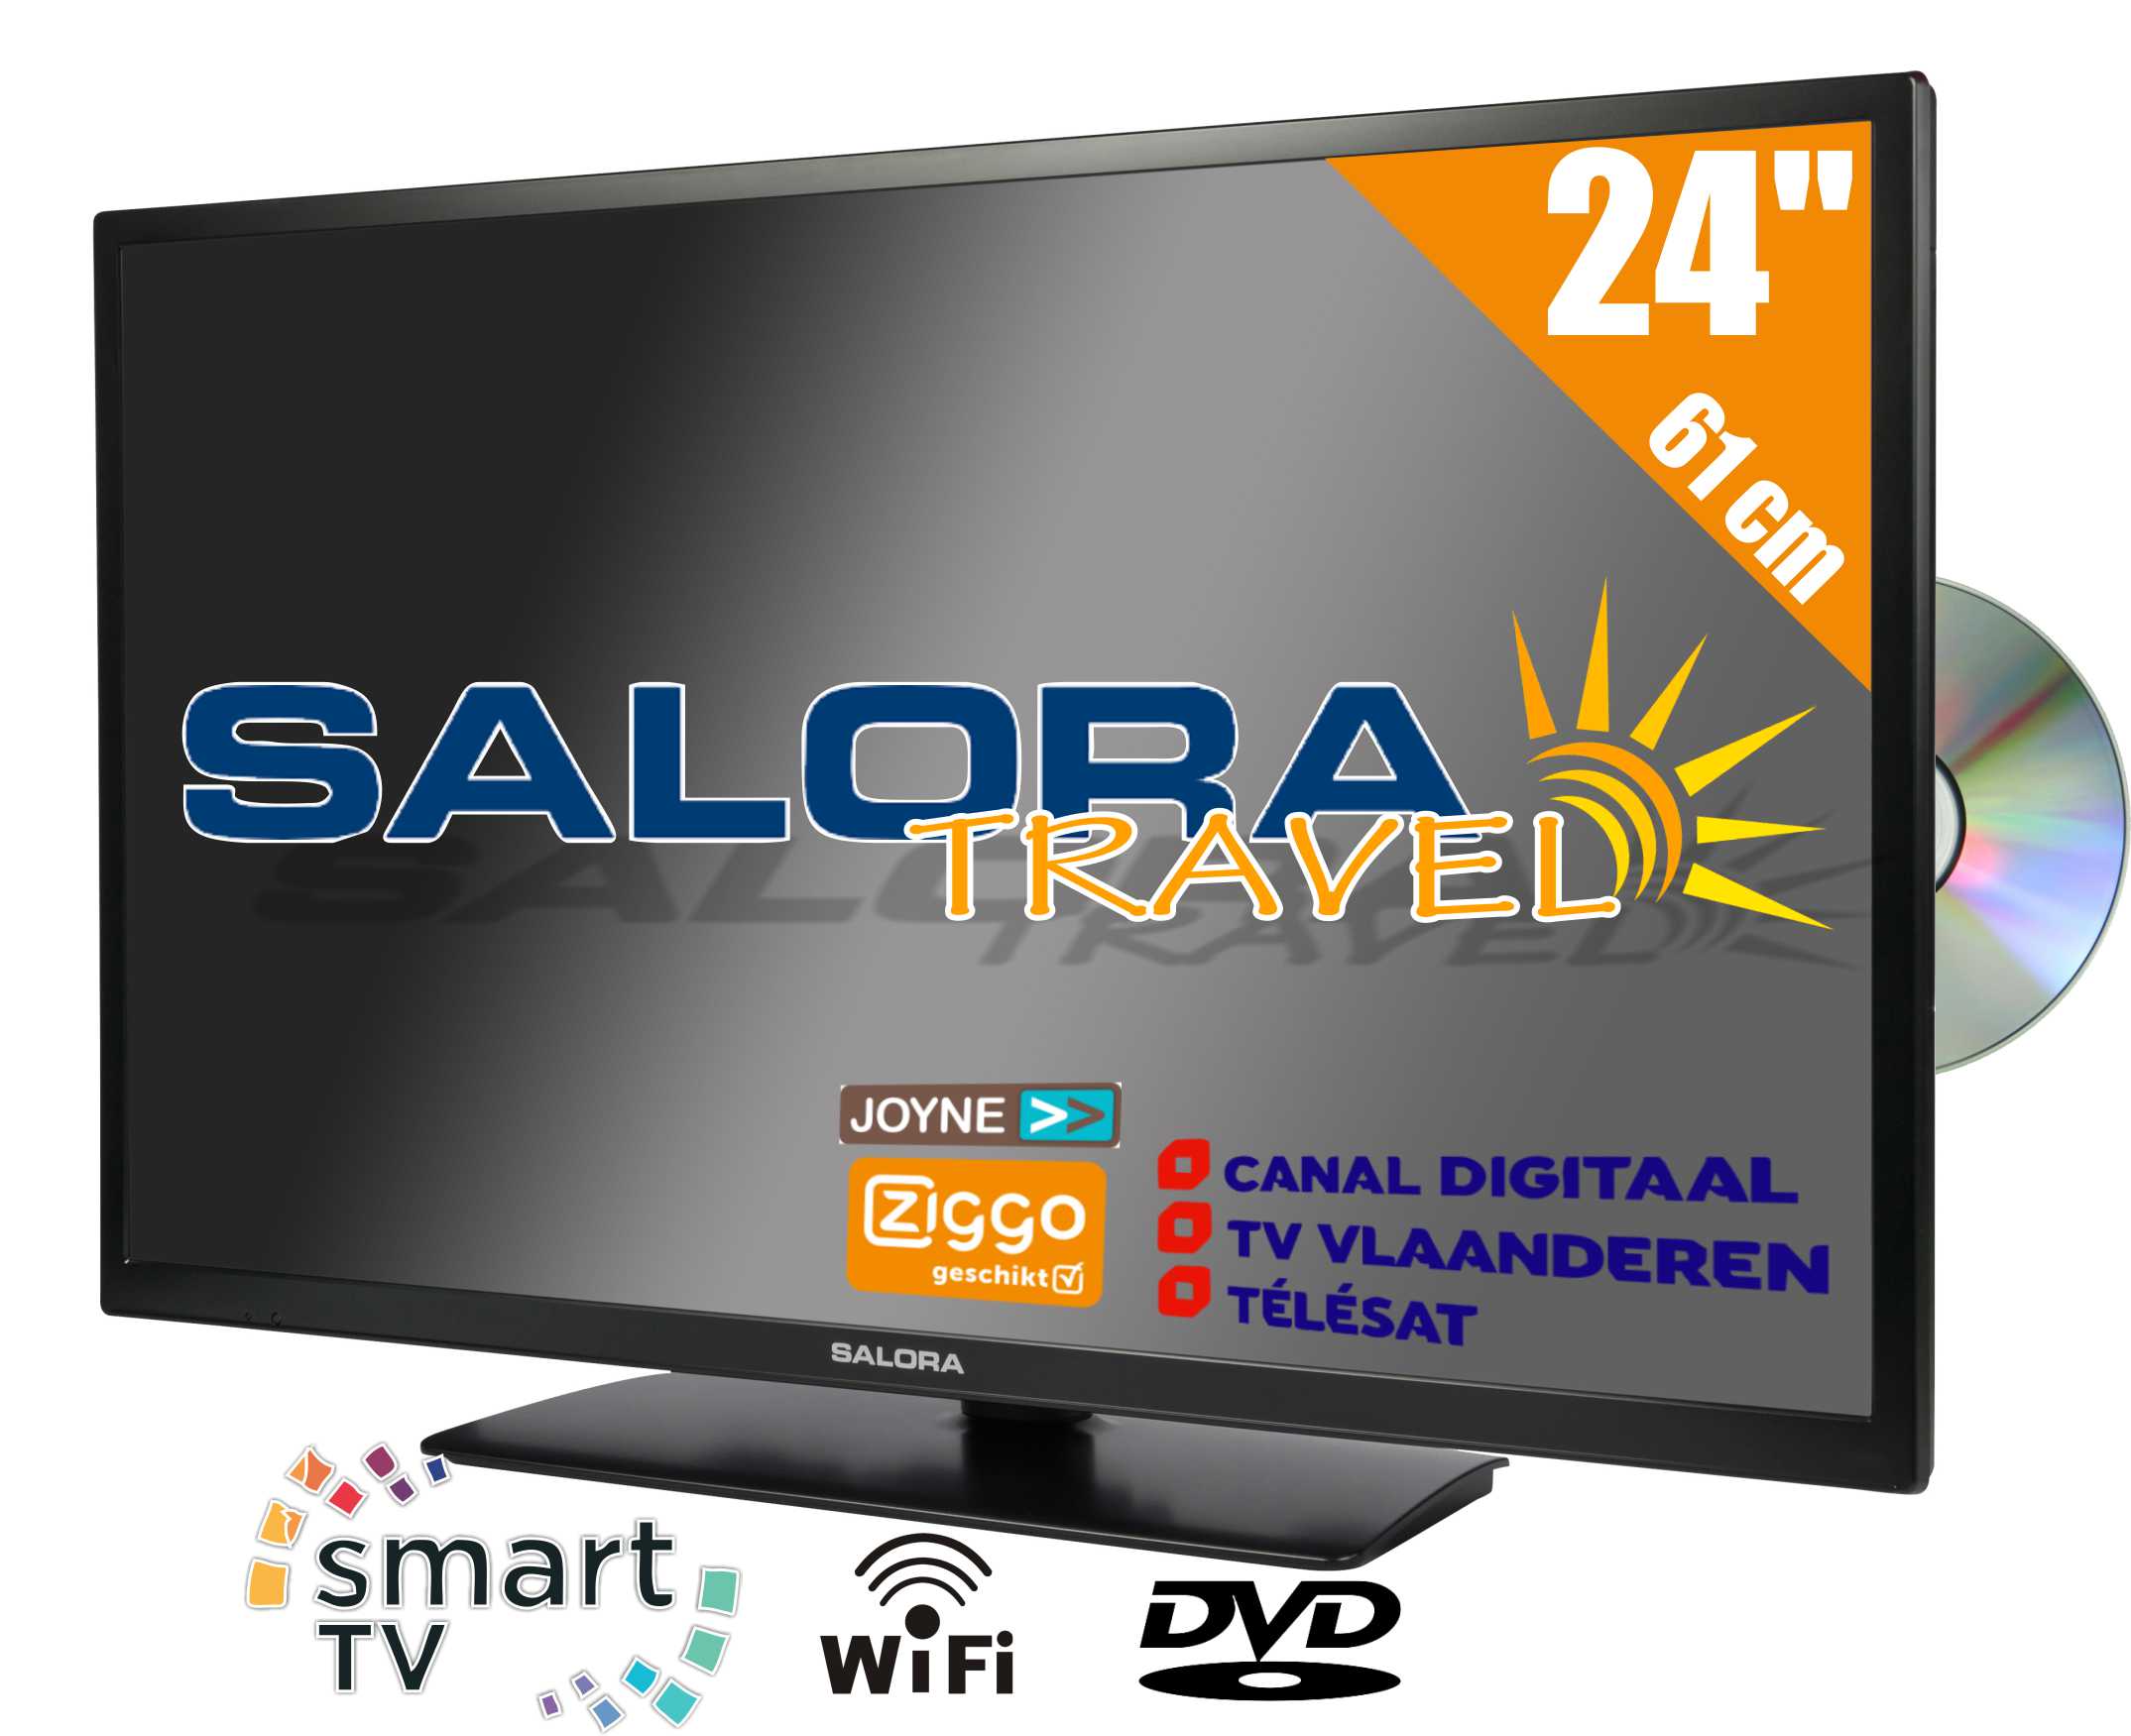 24LED9109CTS2DVDWIFI, 24"/60 cm travel TV 12/230 Volt Smart Wifi DVD, black